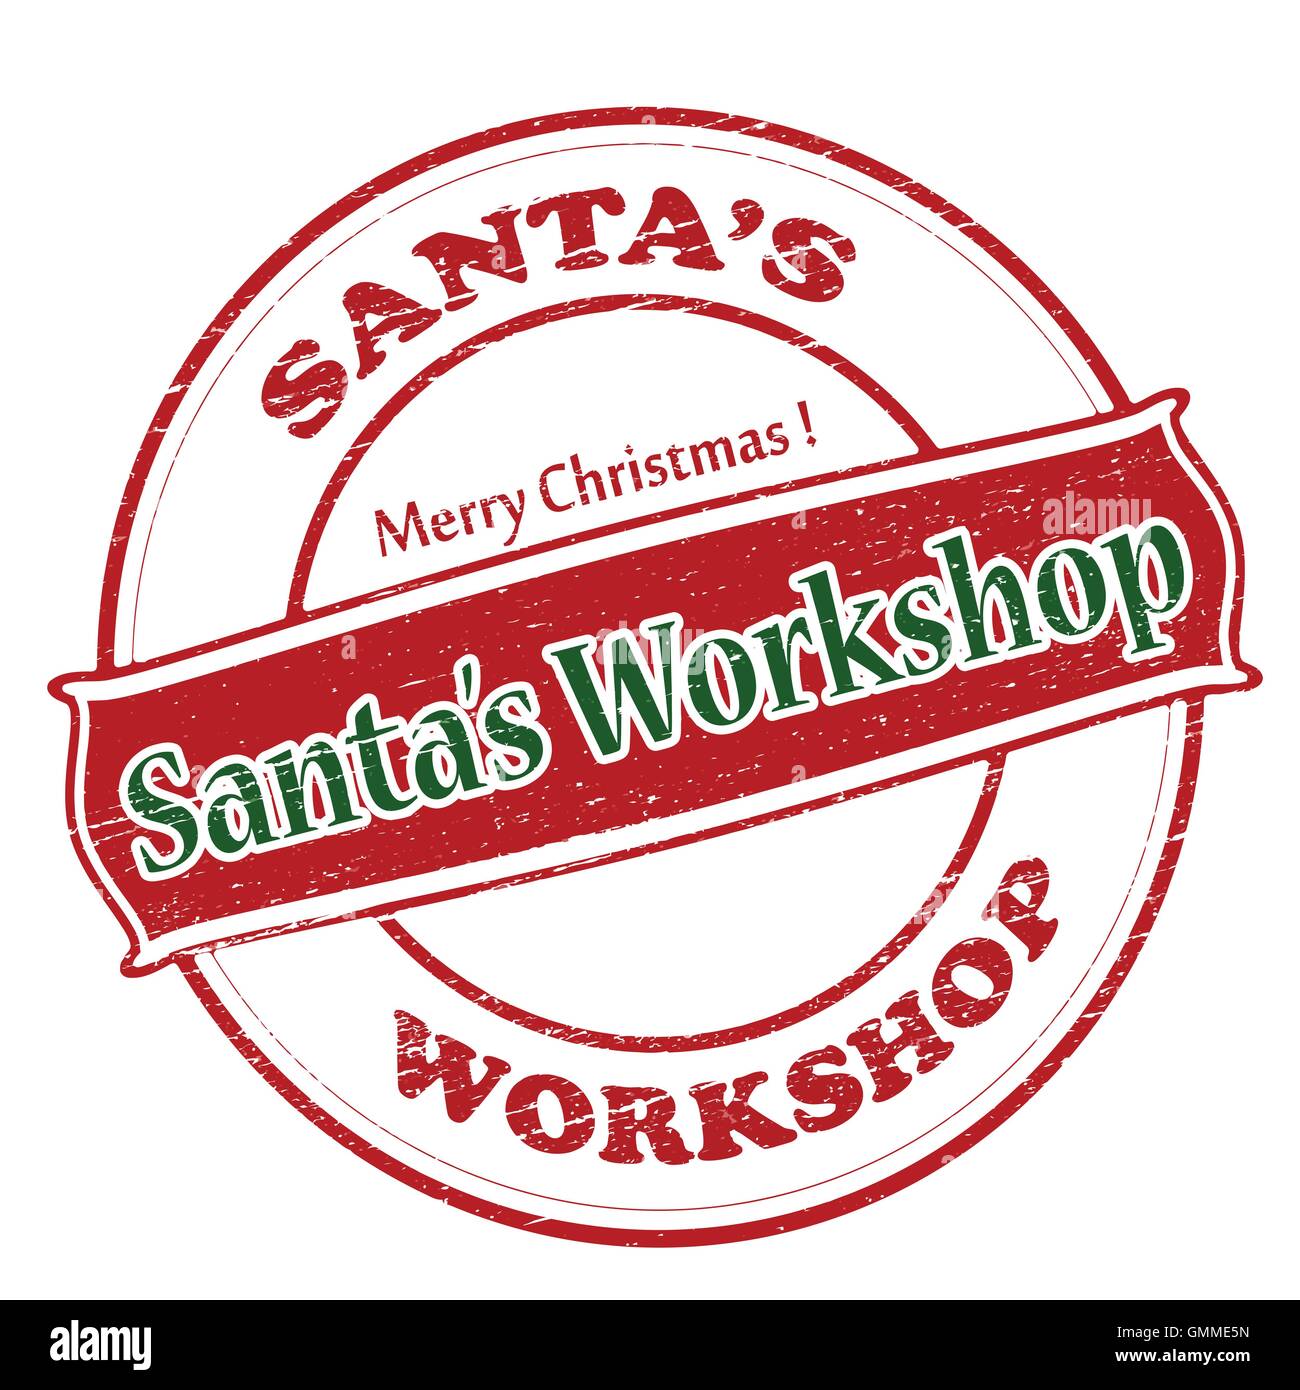 Santa workshop Stock Vector